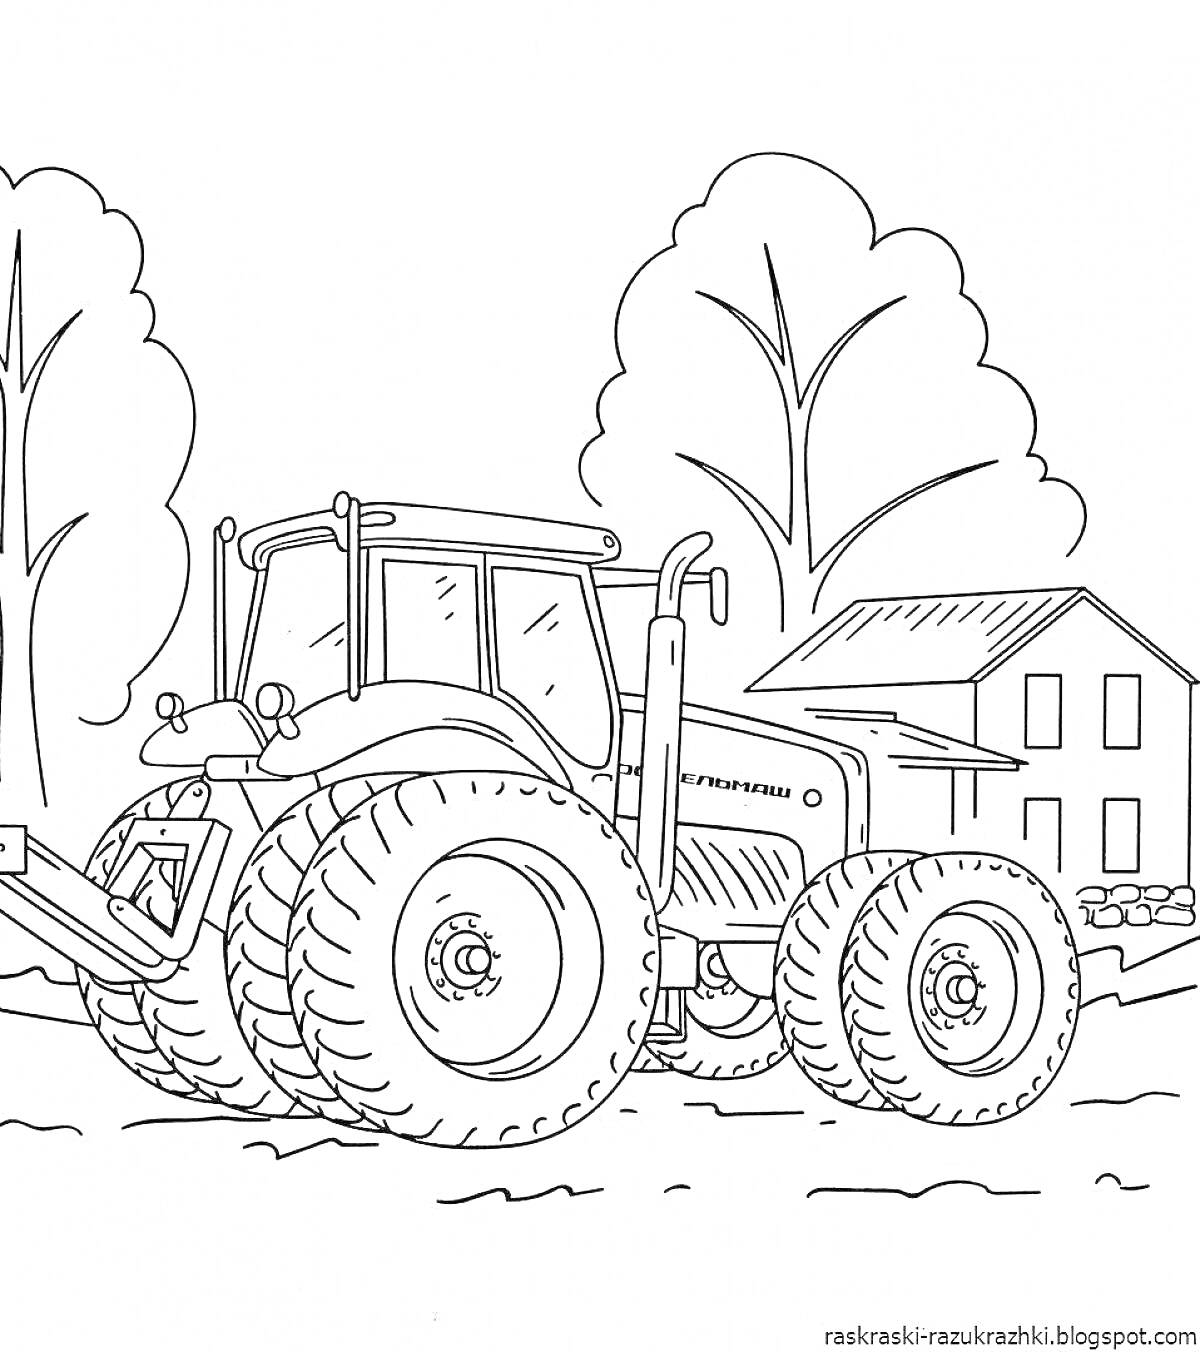 Трактор на фоне дома и деревьев